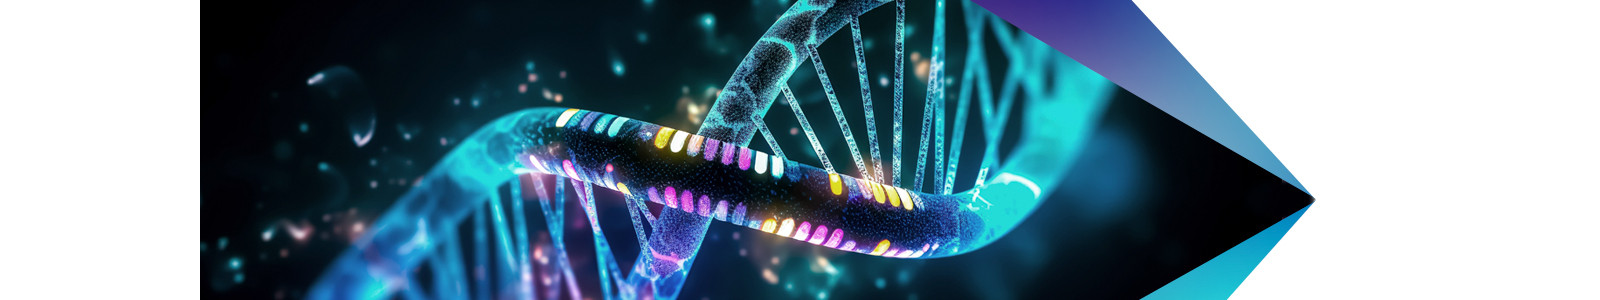 image of DNA strand